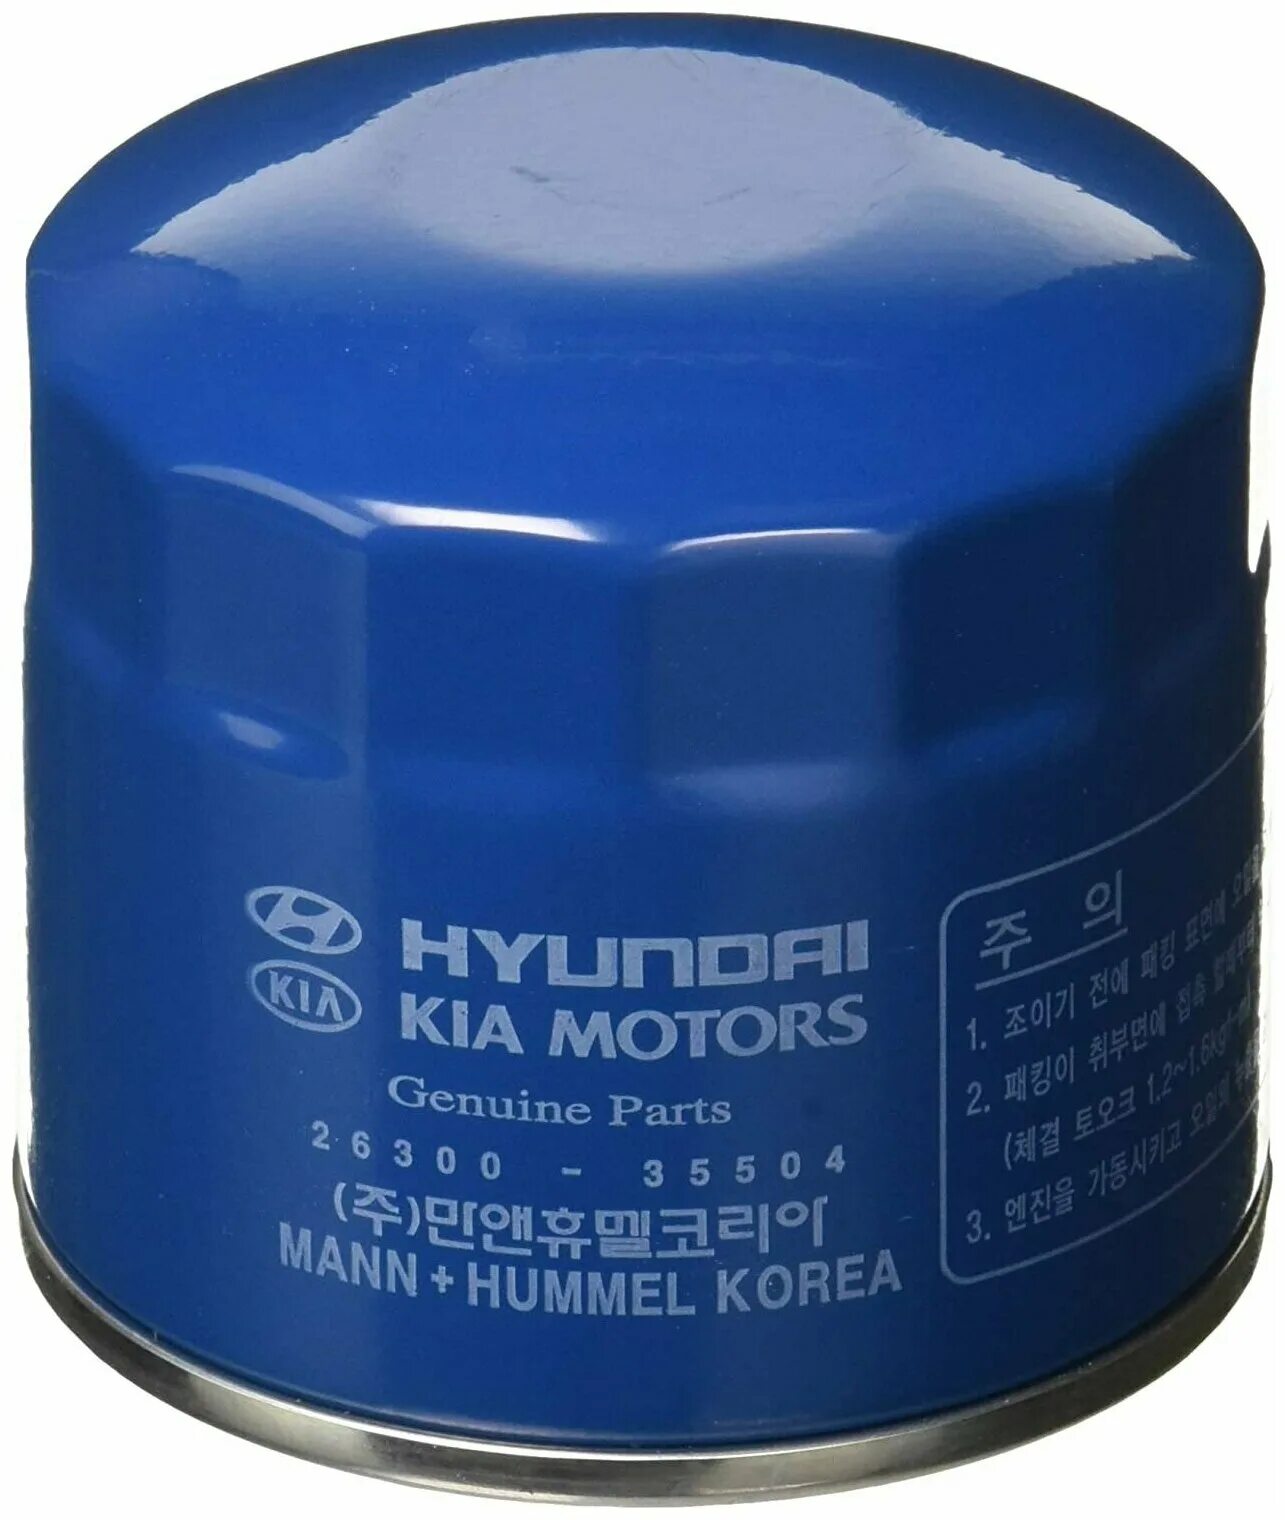 Масляный фильтр Hyundai 26300-35505. Hyundai/Kia 26300-35504 фильтр масляный. 2630035505 Фильтр масляный. Фильтр 26300-35504. Масляный фильтр хендай солярис оригинал